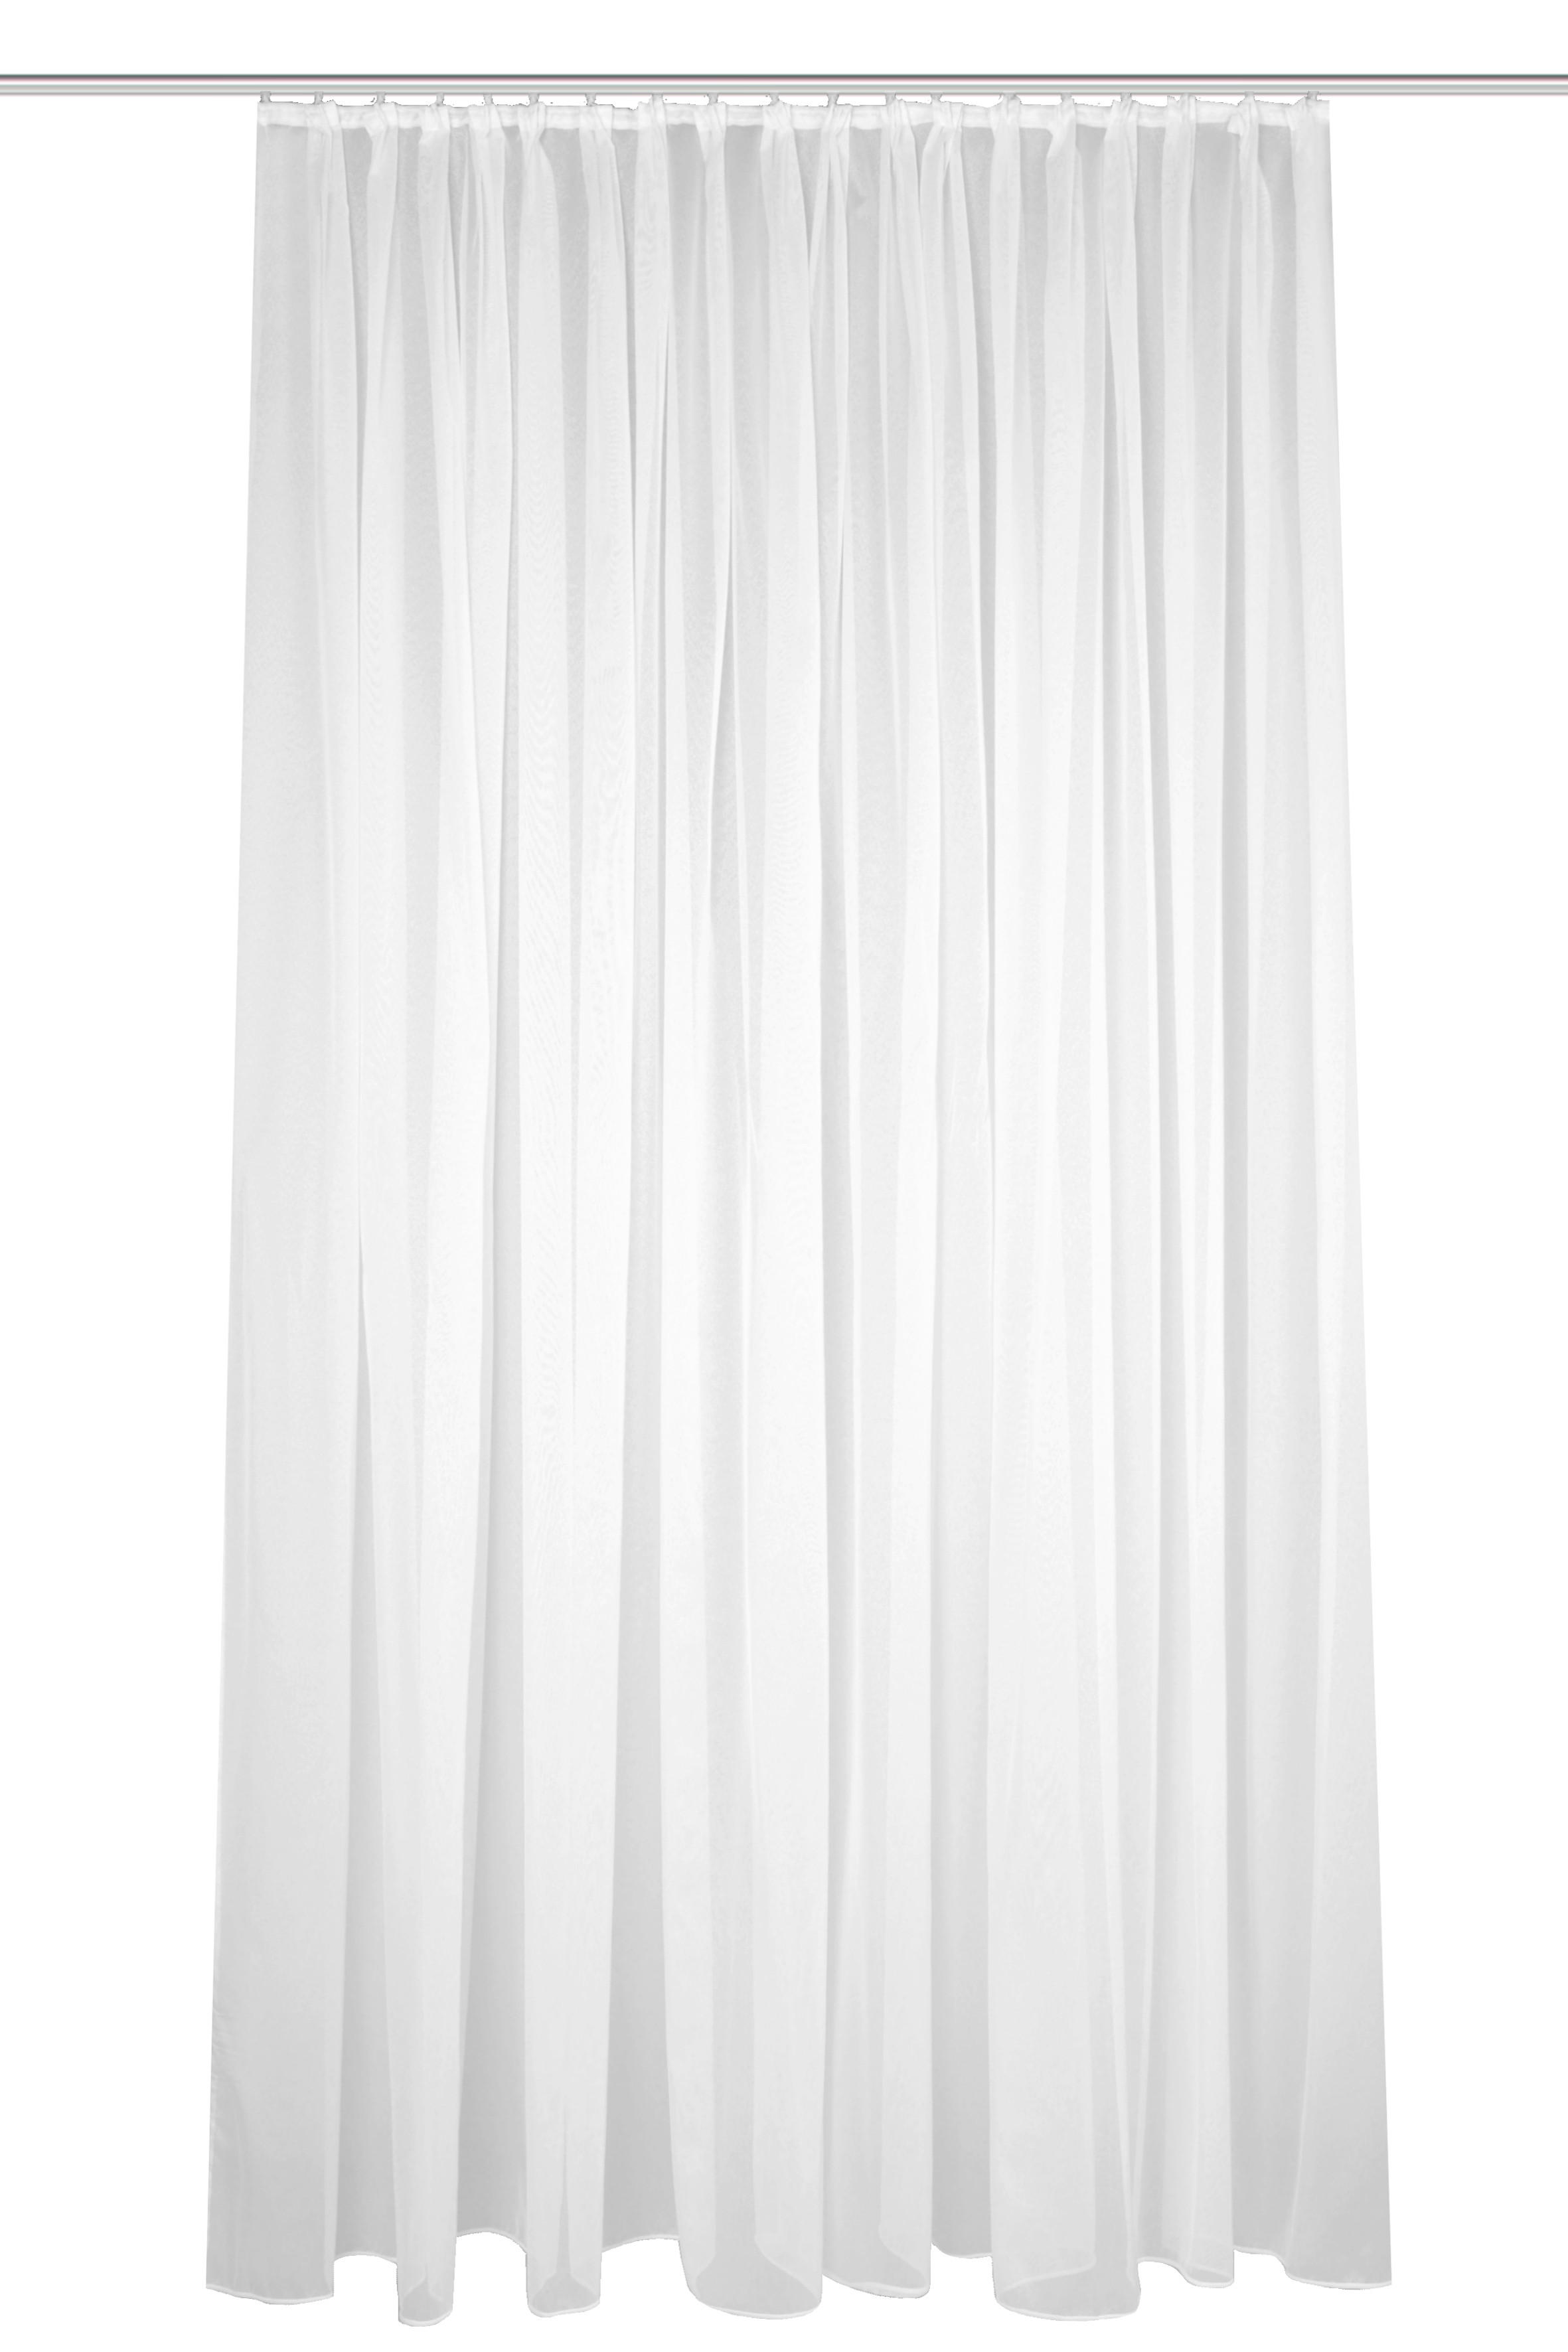 FERTIGSTORE  transparent  300/120 cm   - Weiß, Basics, Textil (300/120cm)